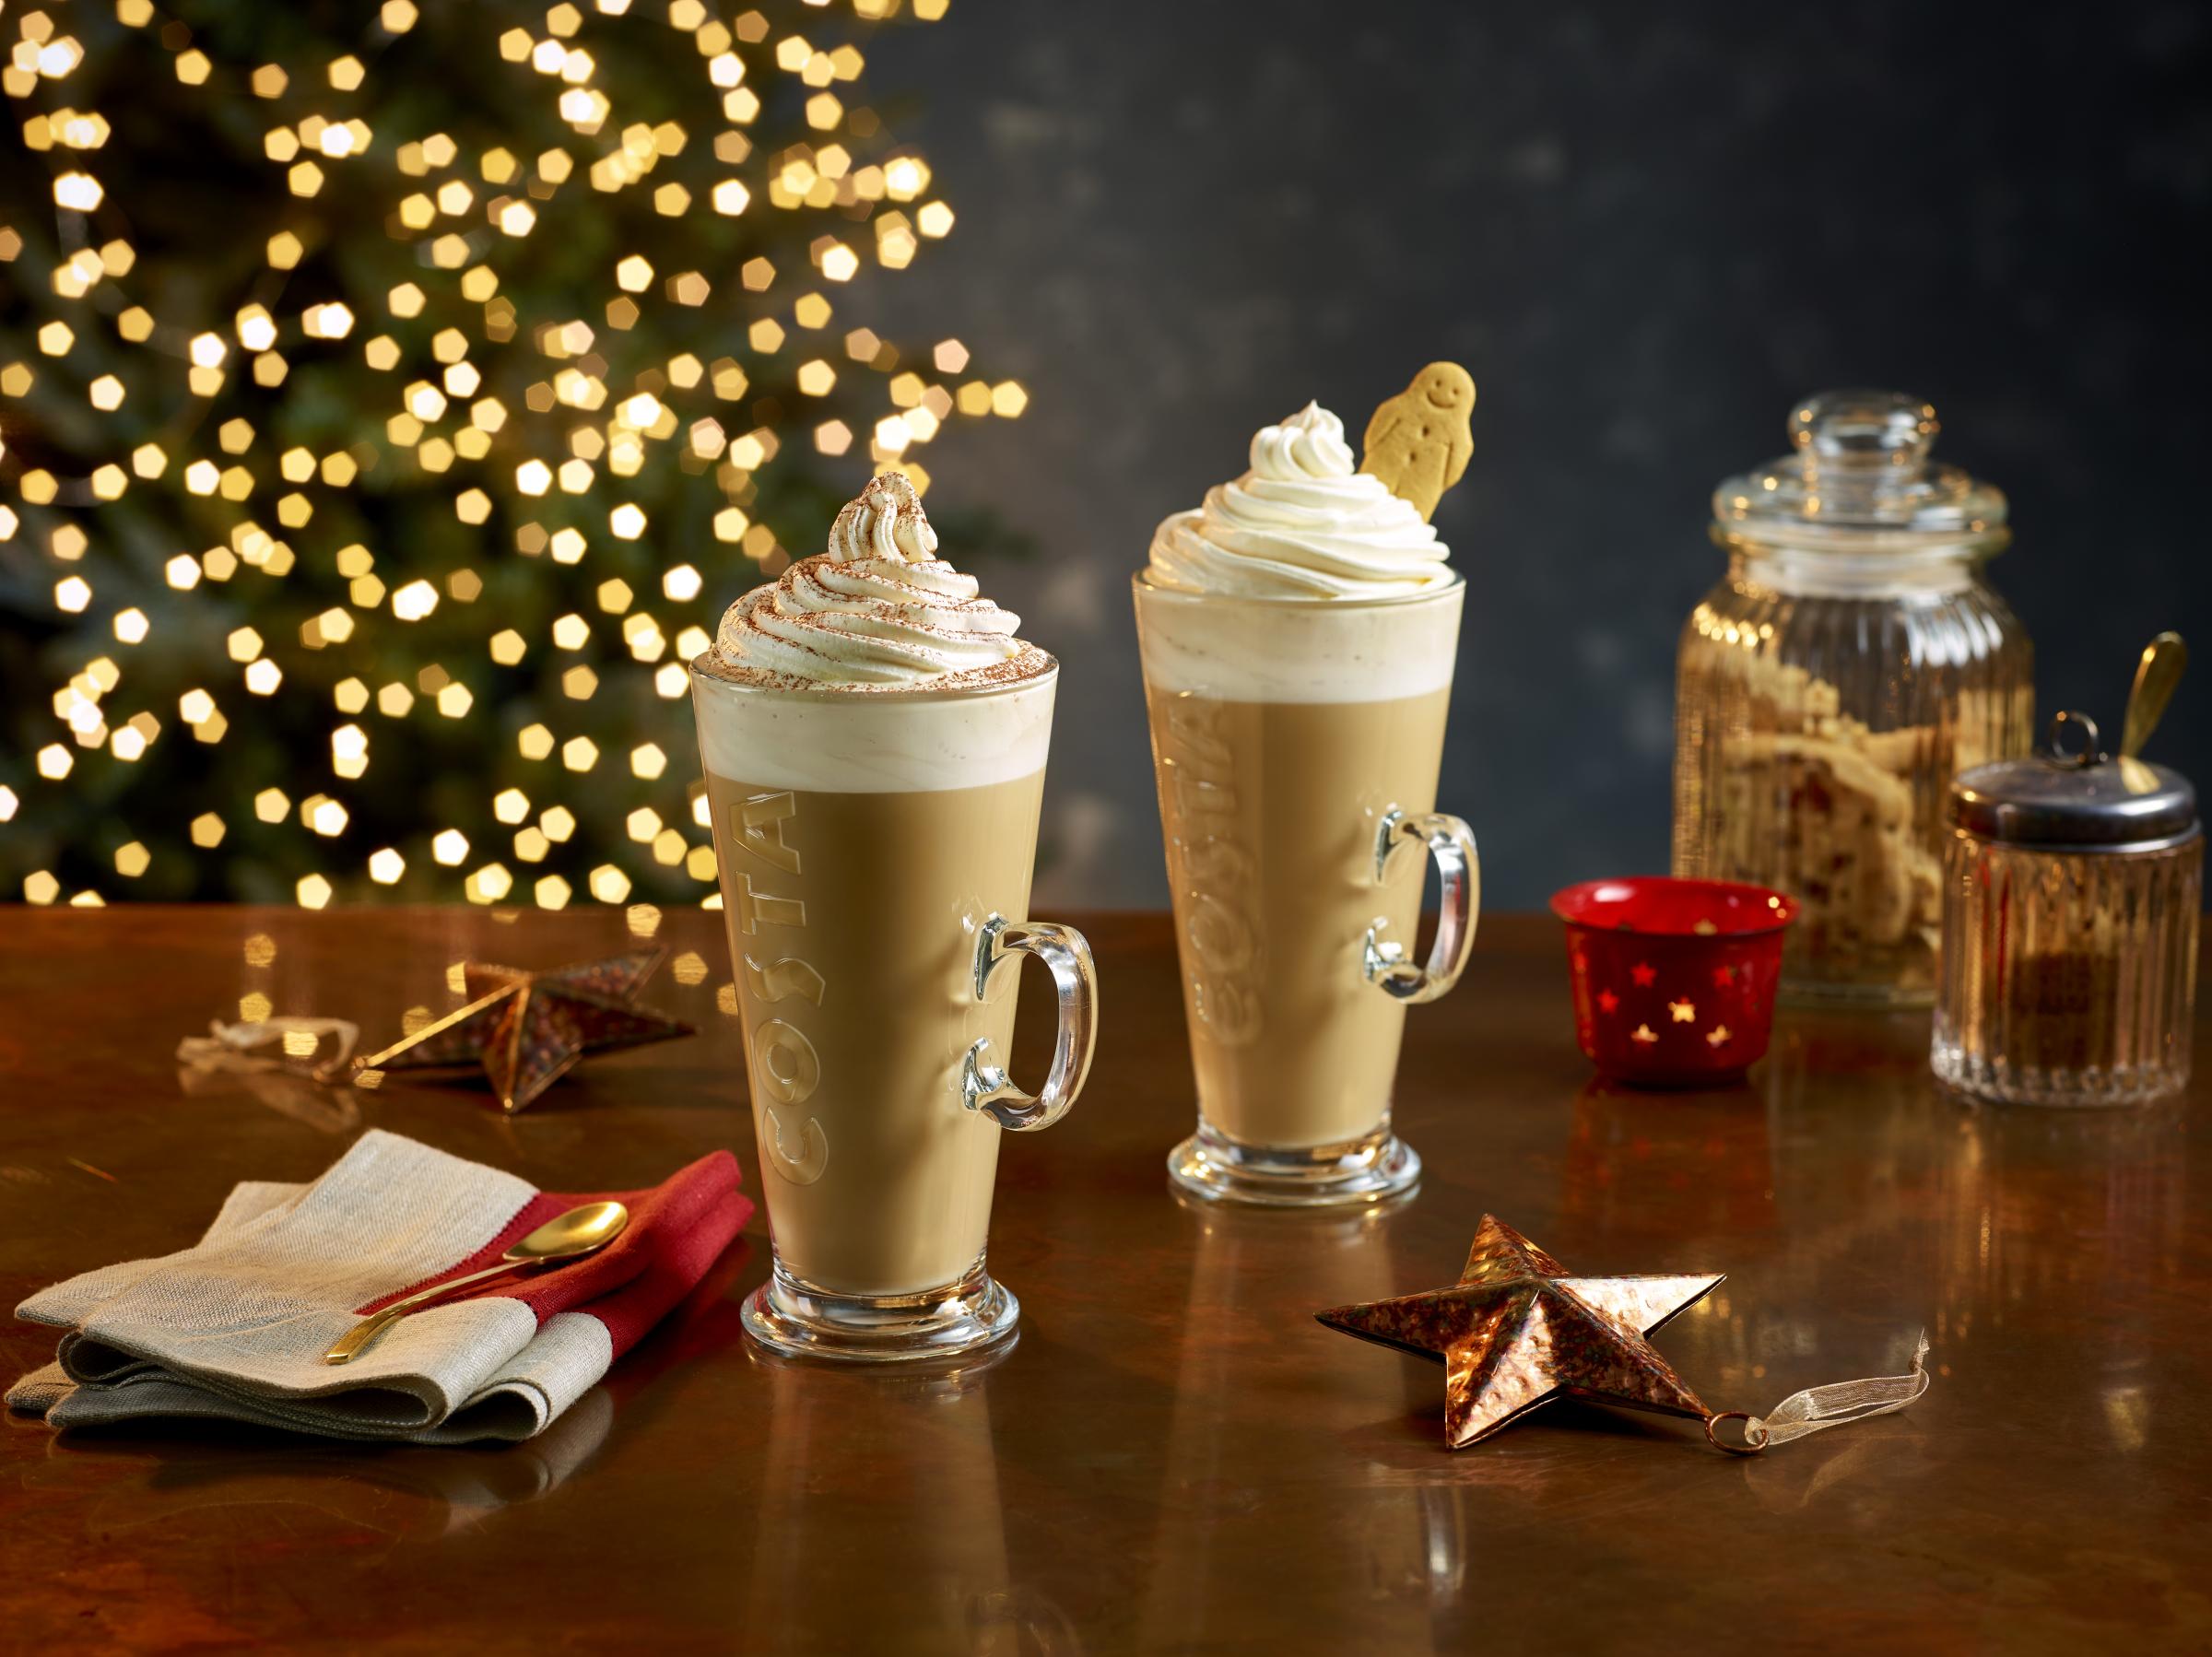 Costa Coffee reveals its ‘limited’ autumn 2020 seasonal drinks